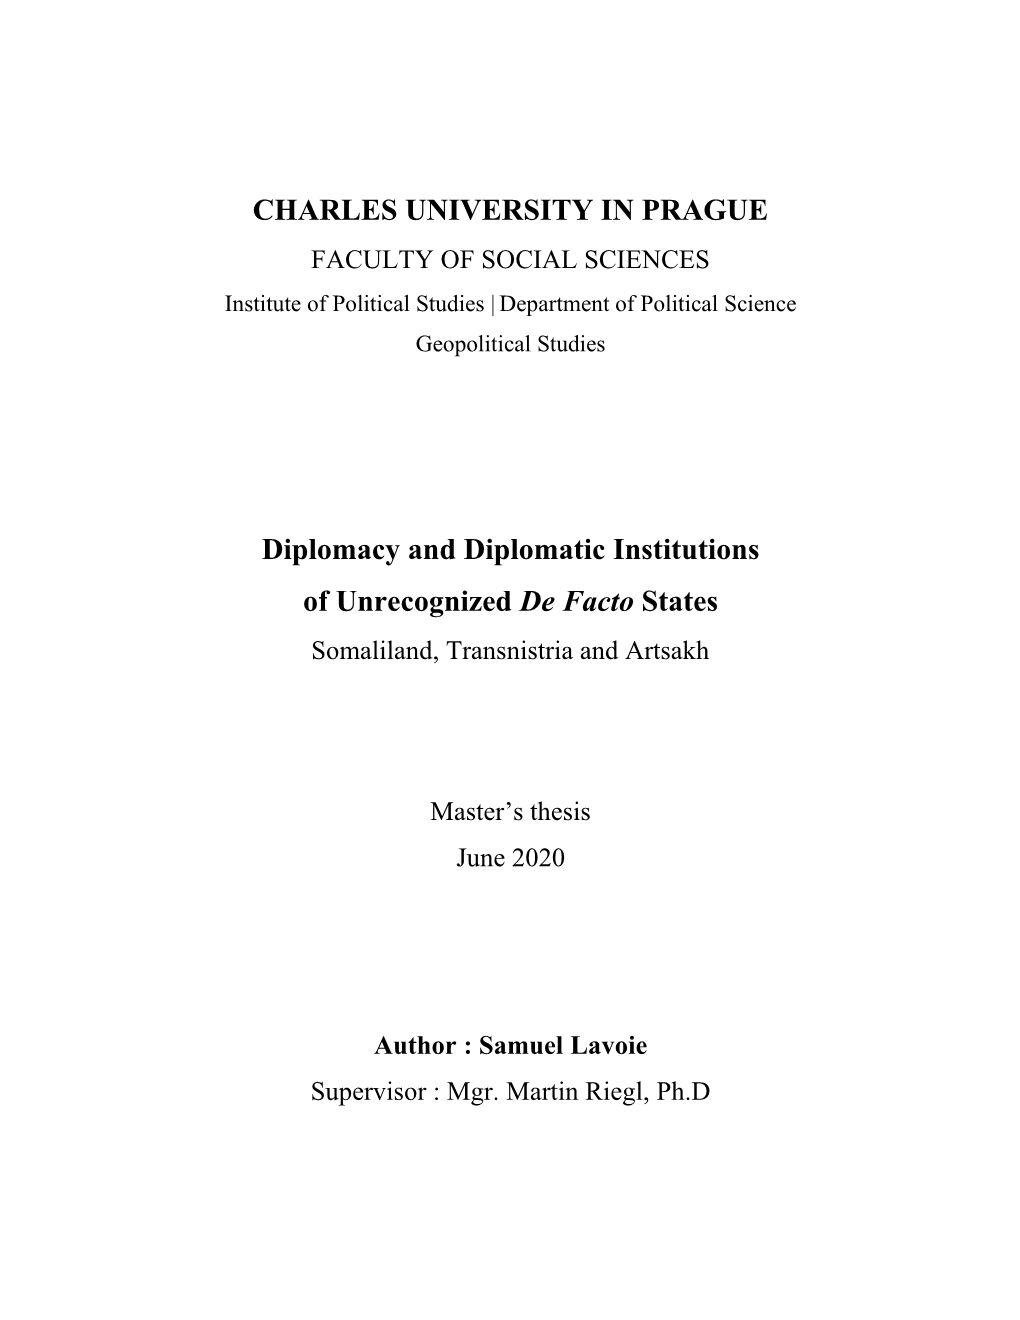 CHARLES UNIVERSITY in PRAGUE Diplomacy and Diplomatic